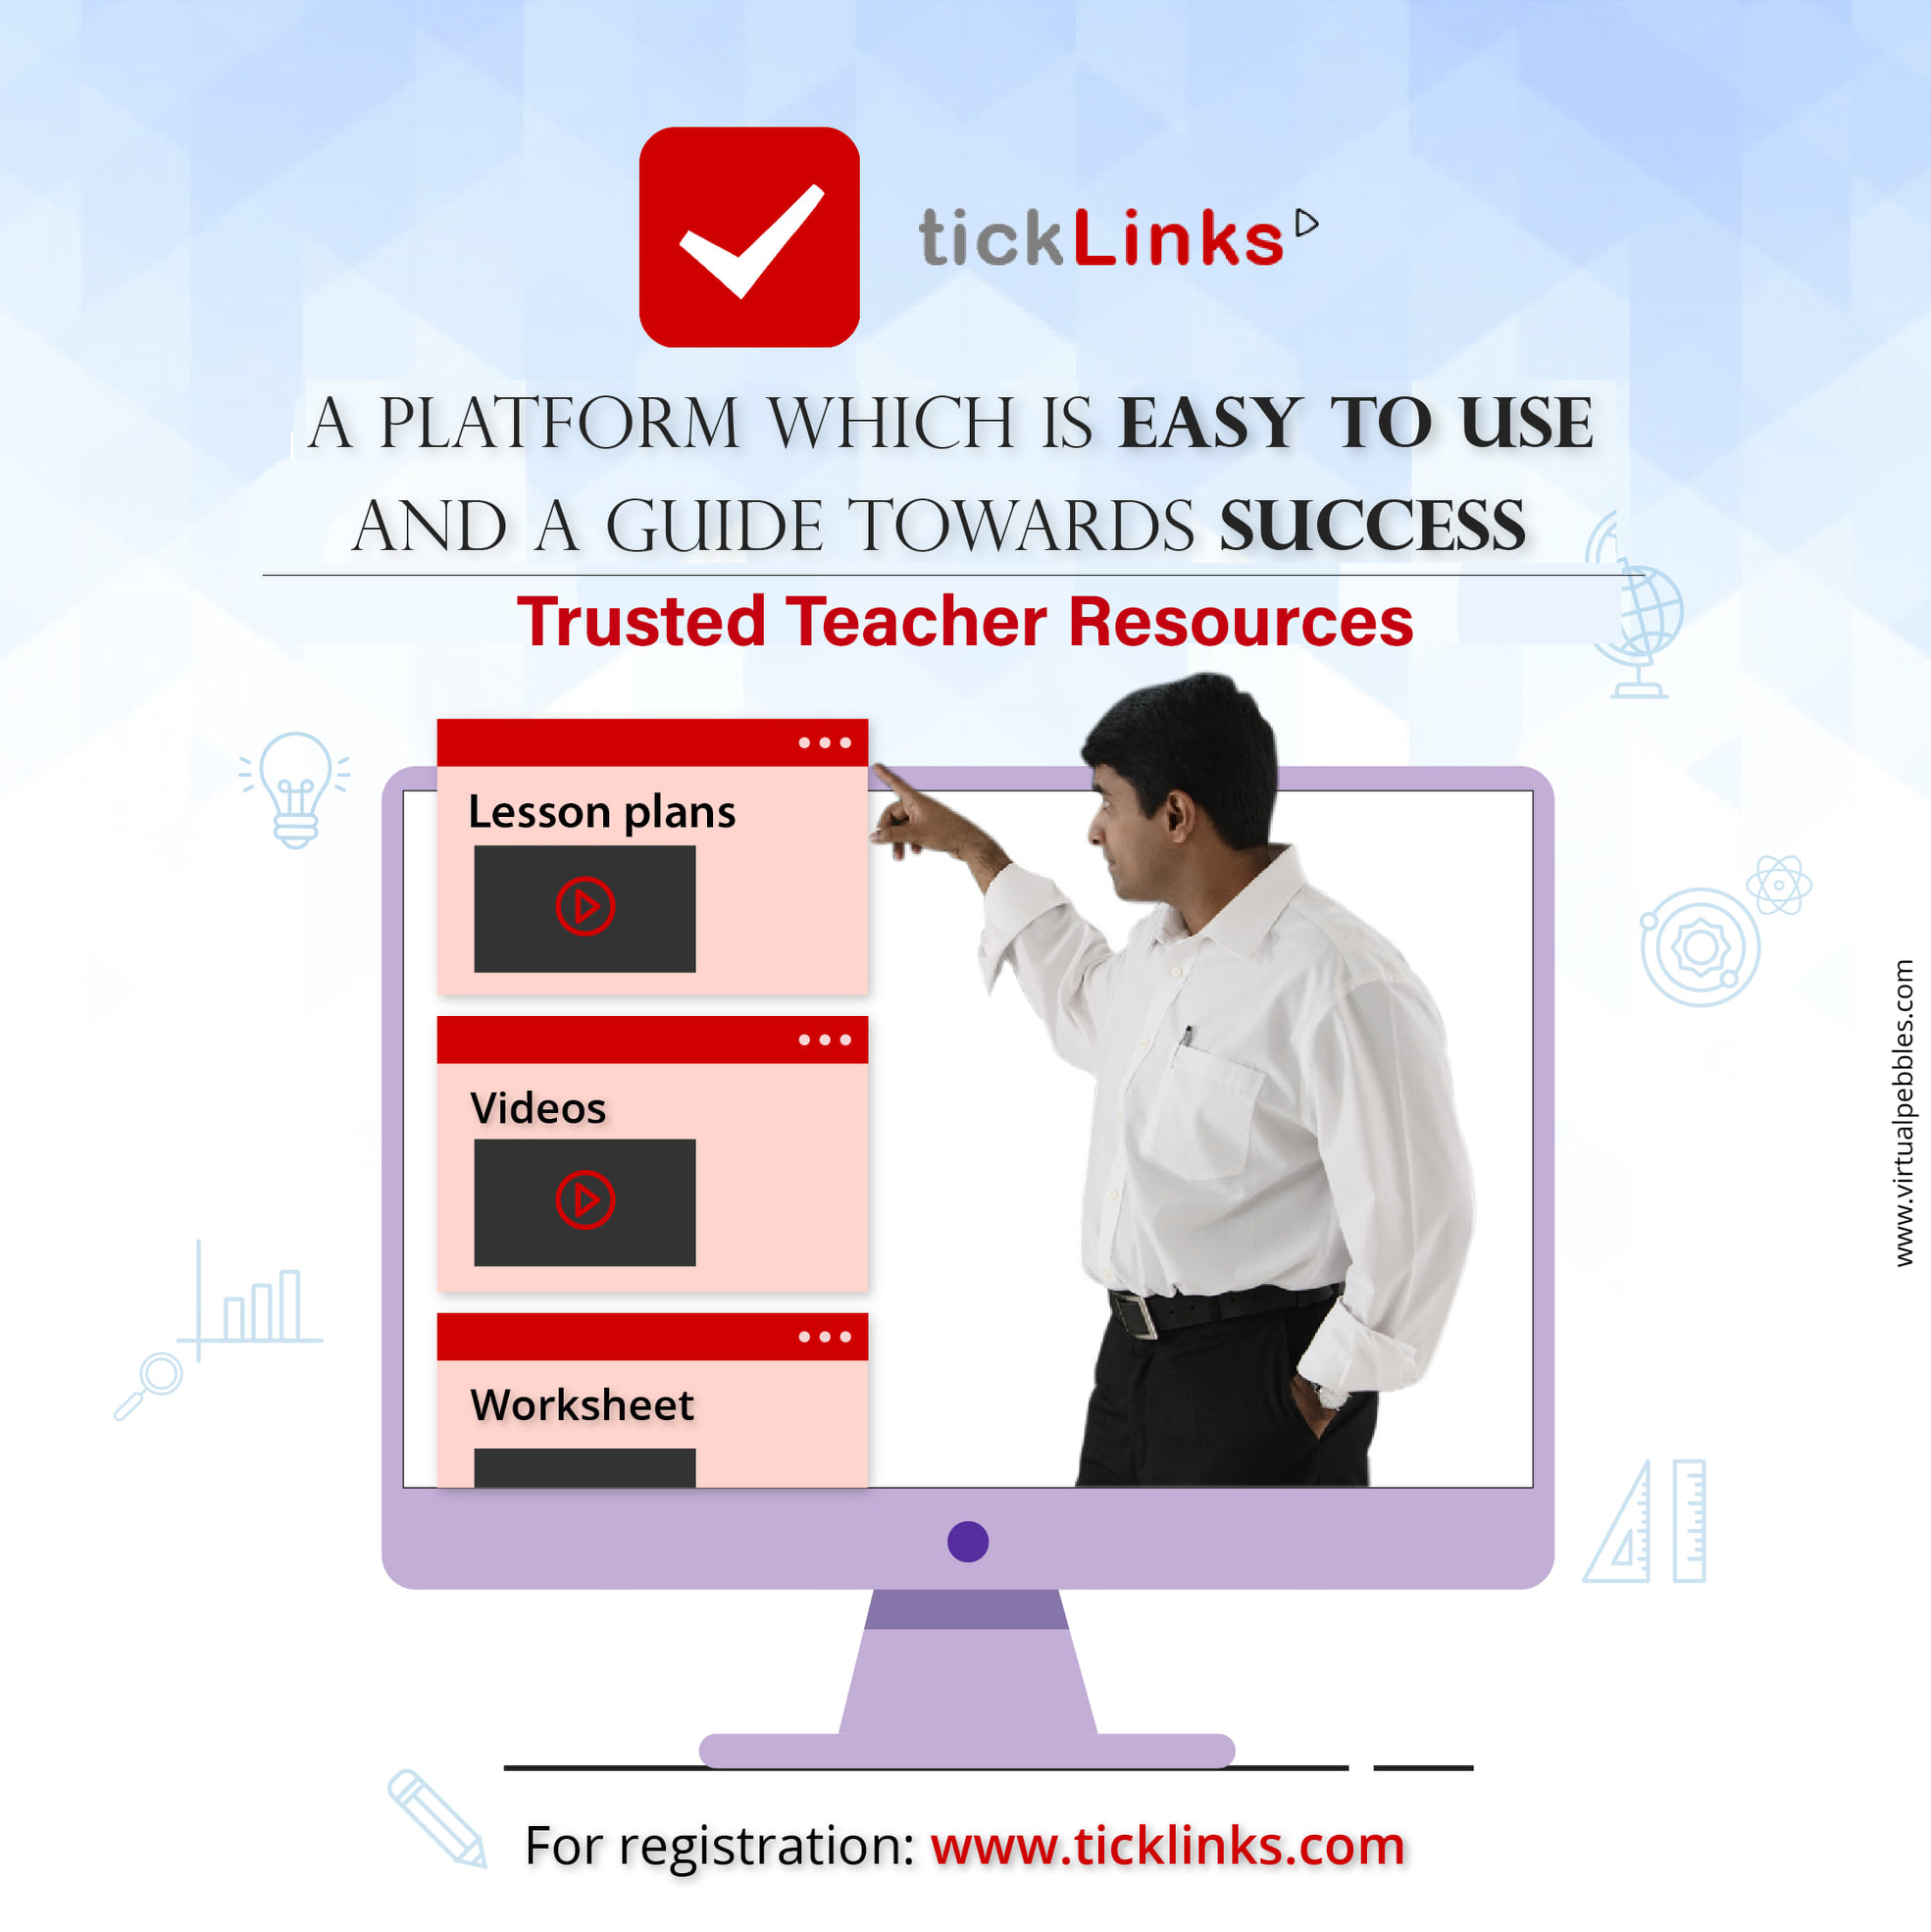 School Lesson Plans - tickLinks Partner with Firki